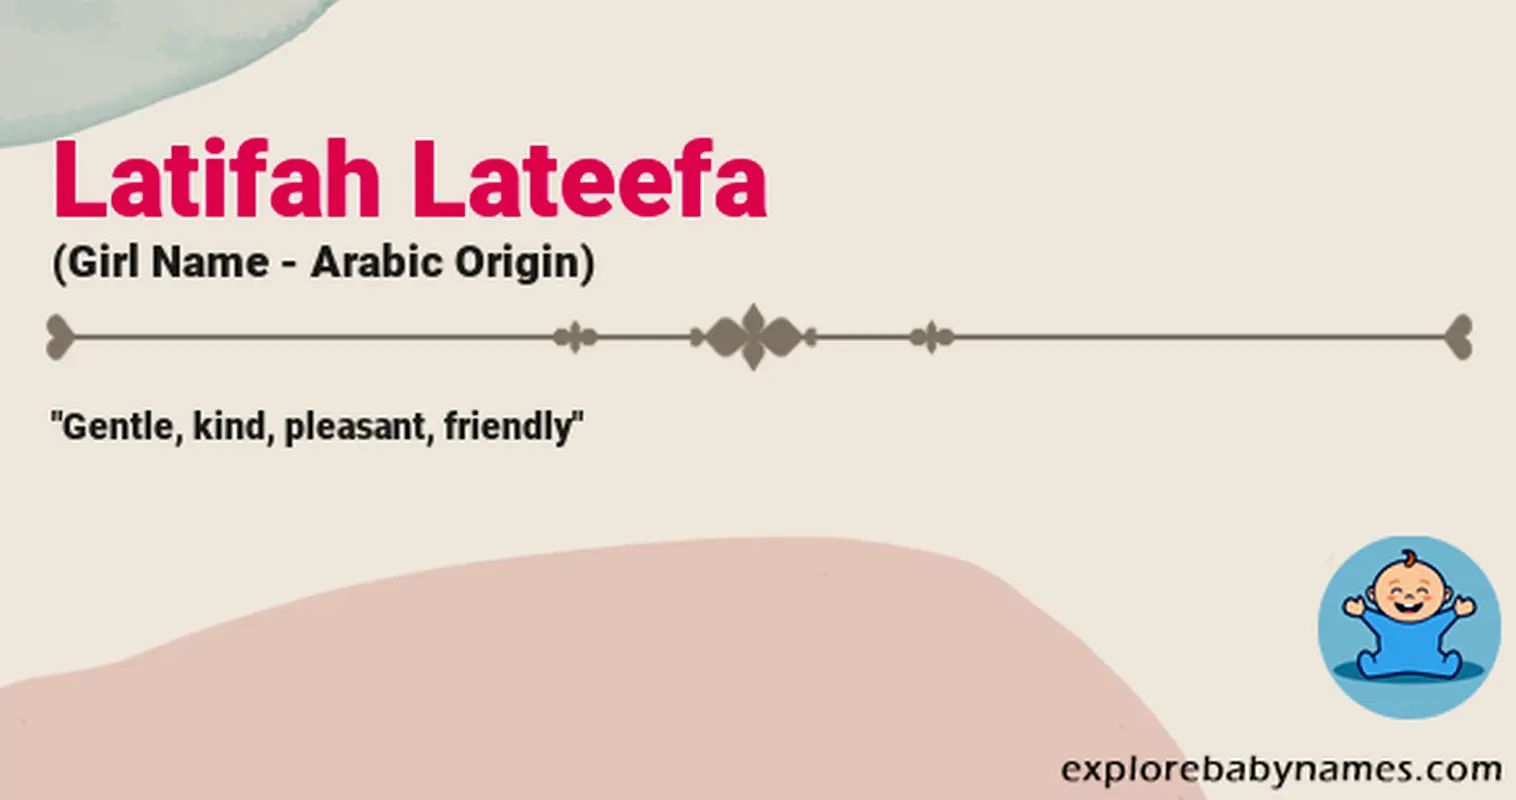 Meaning of Latifah Lateefa